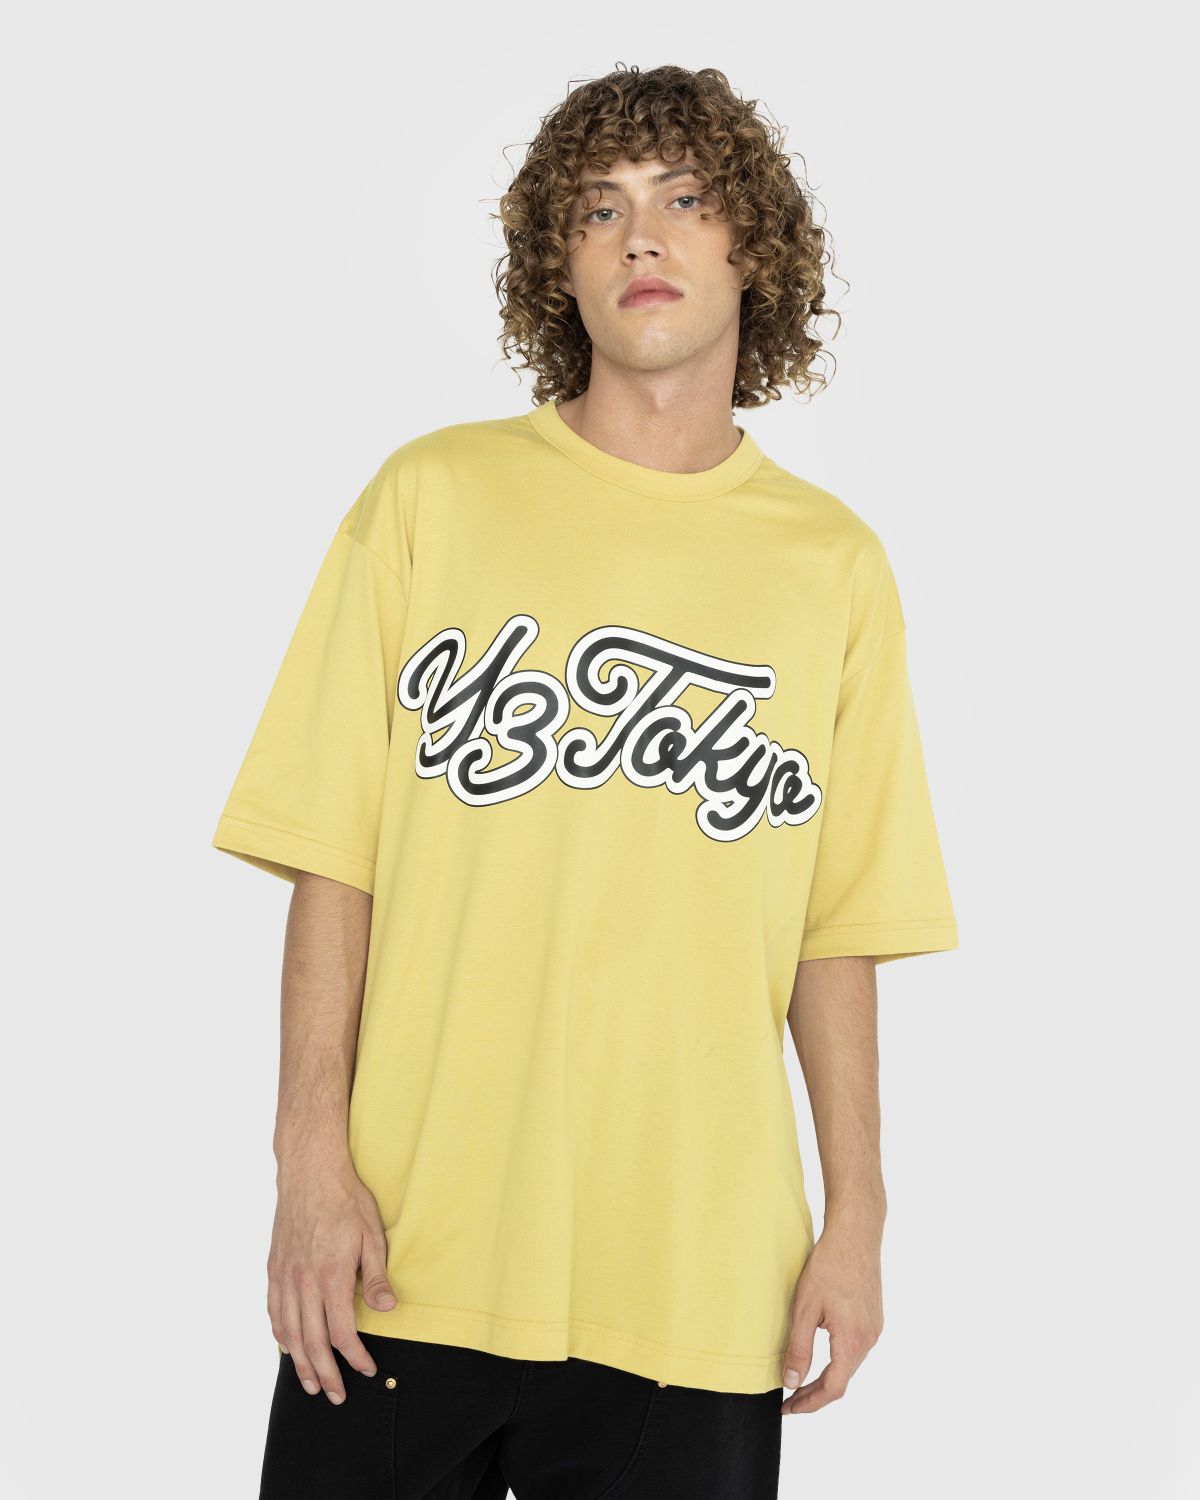 Y-3 – Tokyo T-Shirt Blanch Yellow | Highsnobiety Shop